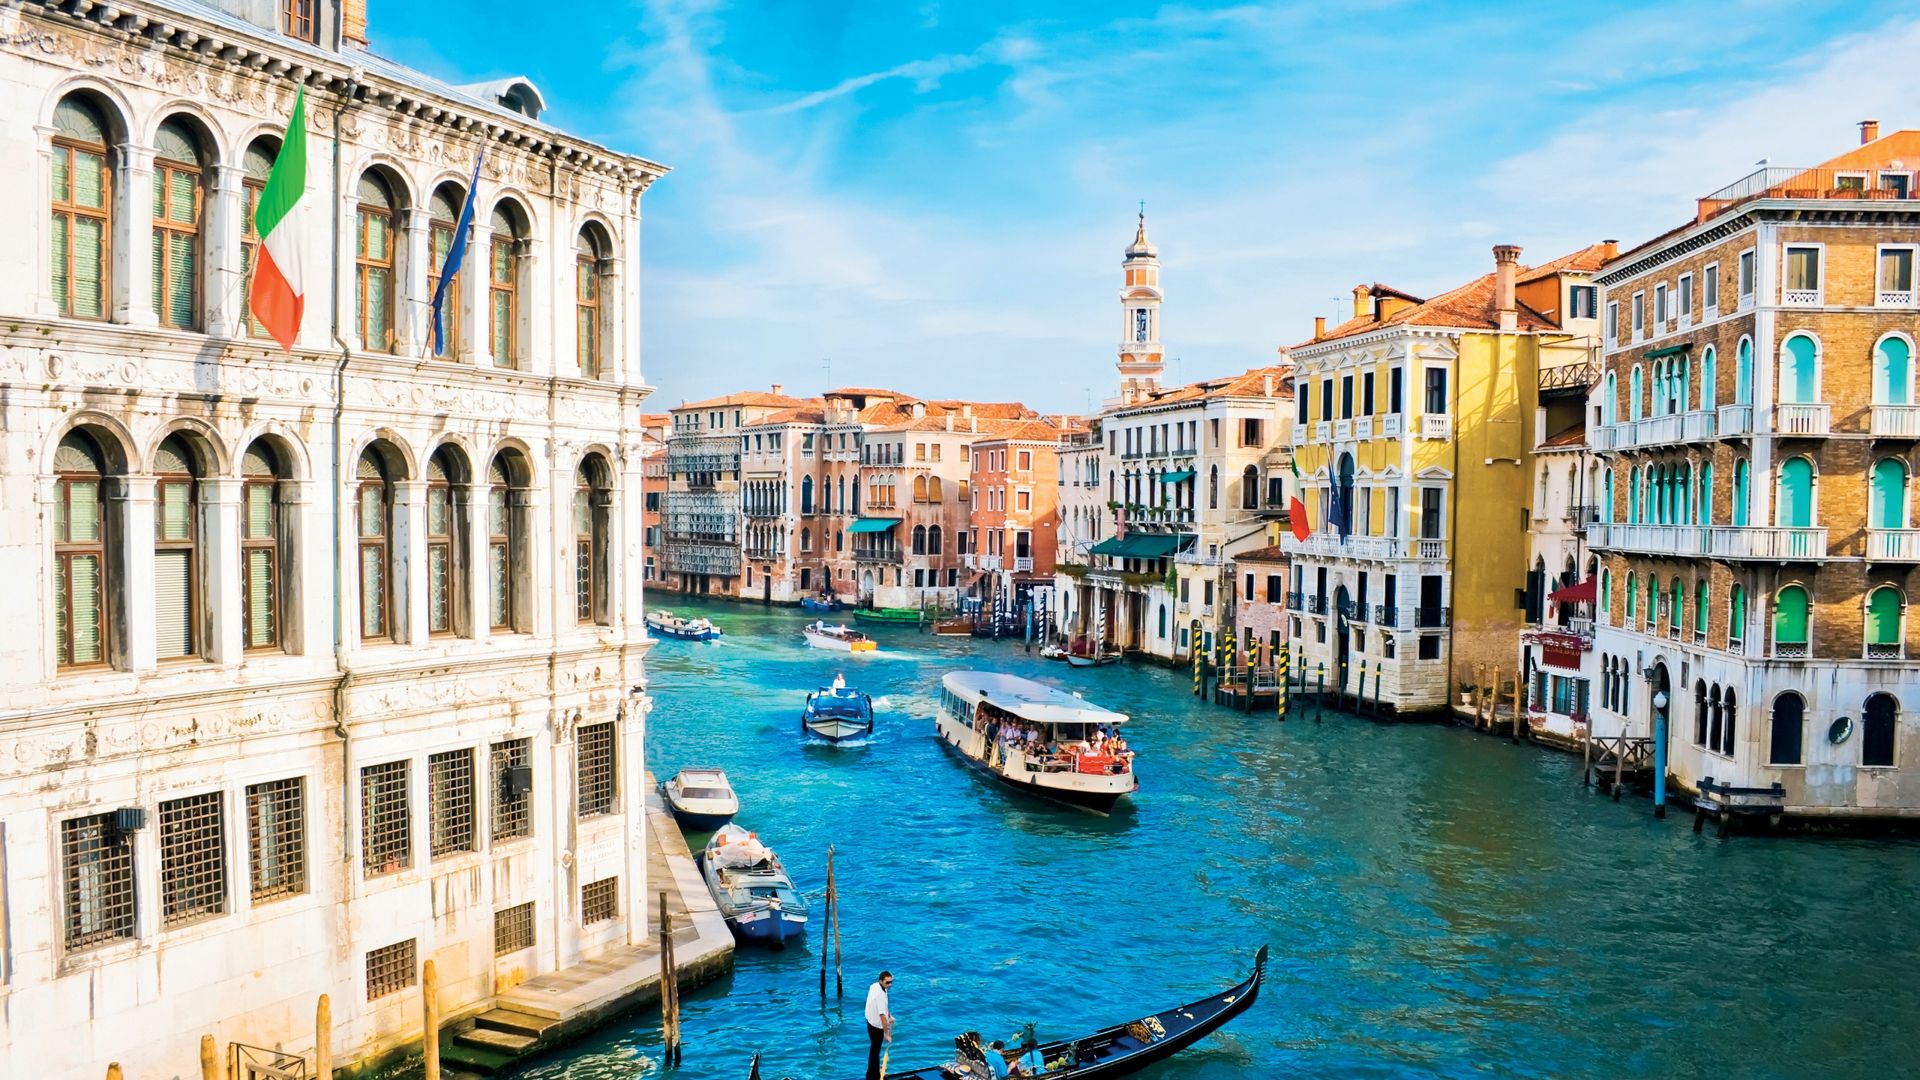 Grand Canal, Venice, Italy, Europe, travel, tourism (horizontal)